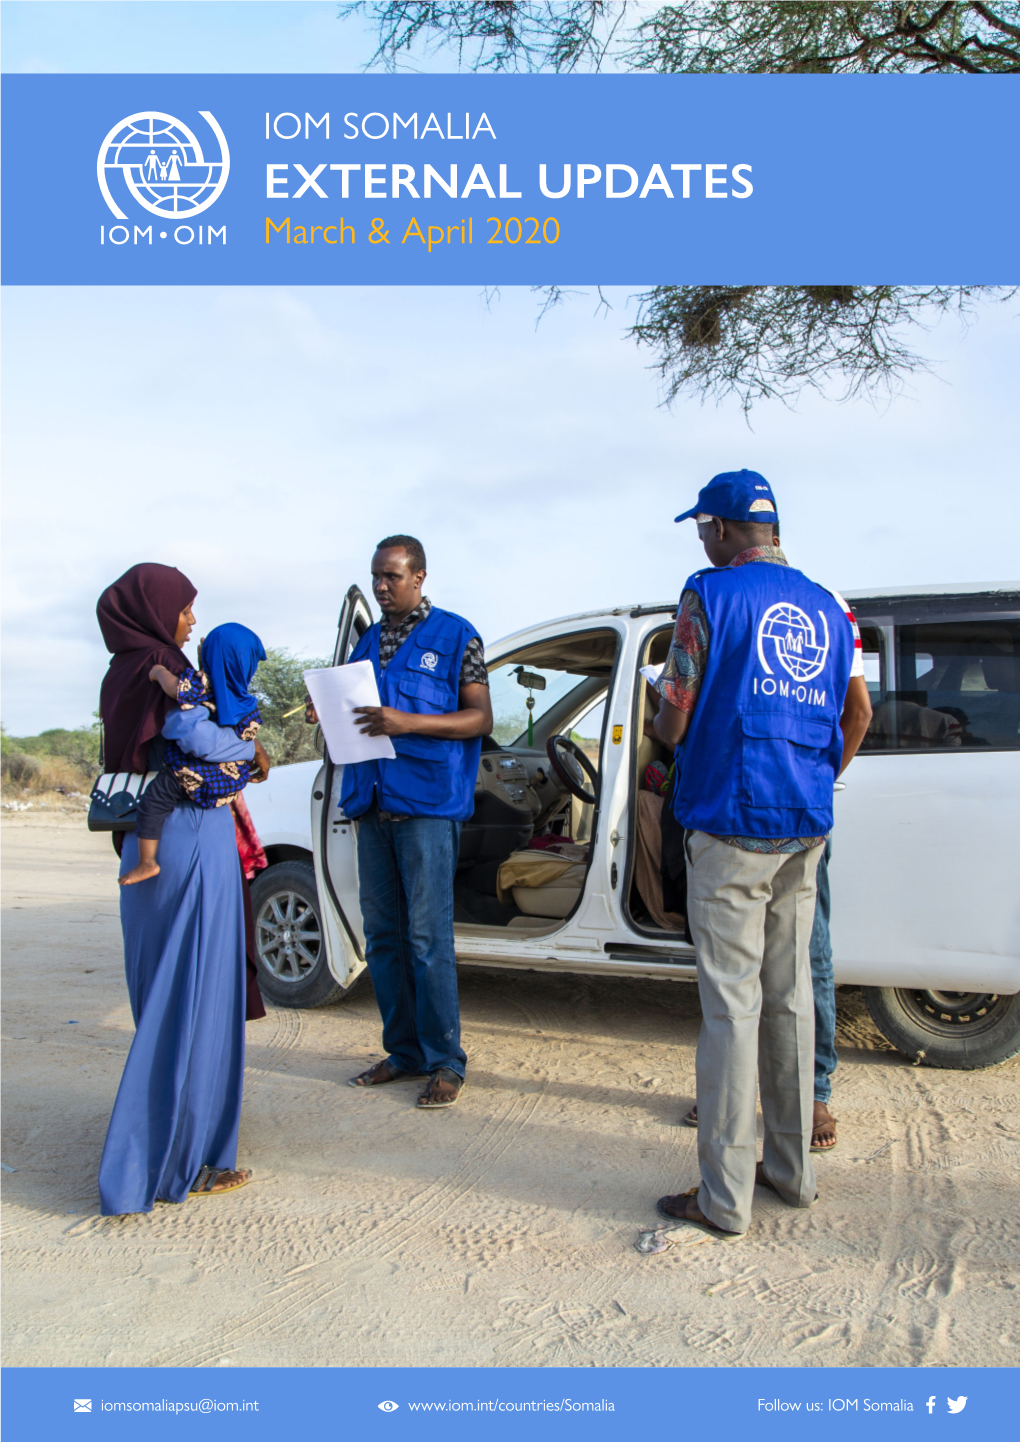 IOM SOMALIA EXTERNAL UPDATES March & April 2020